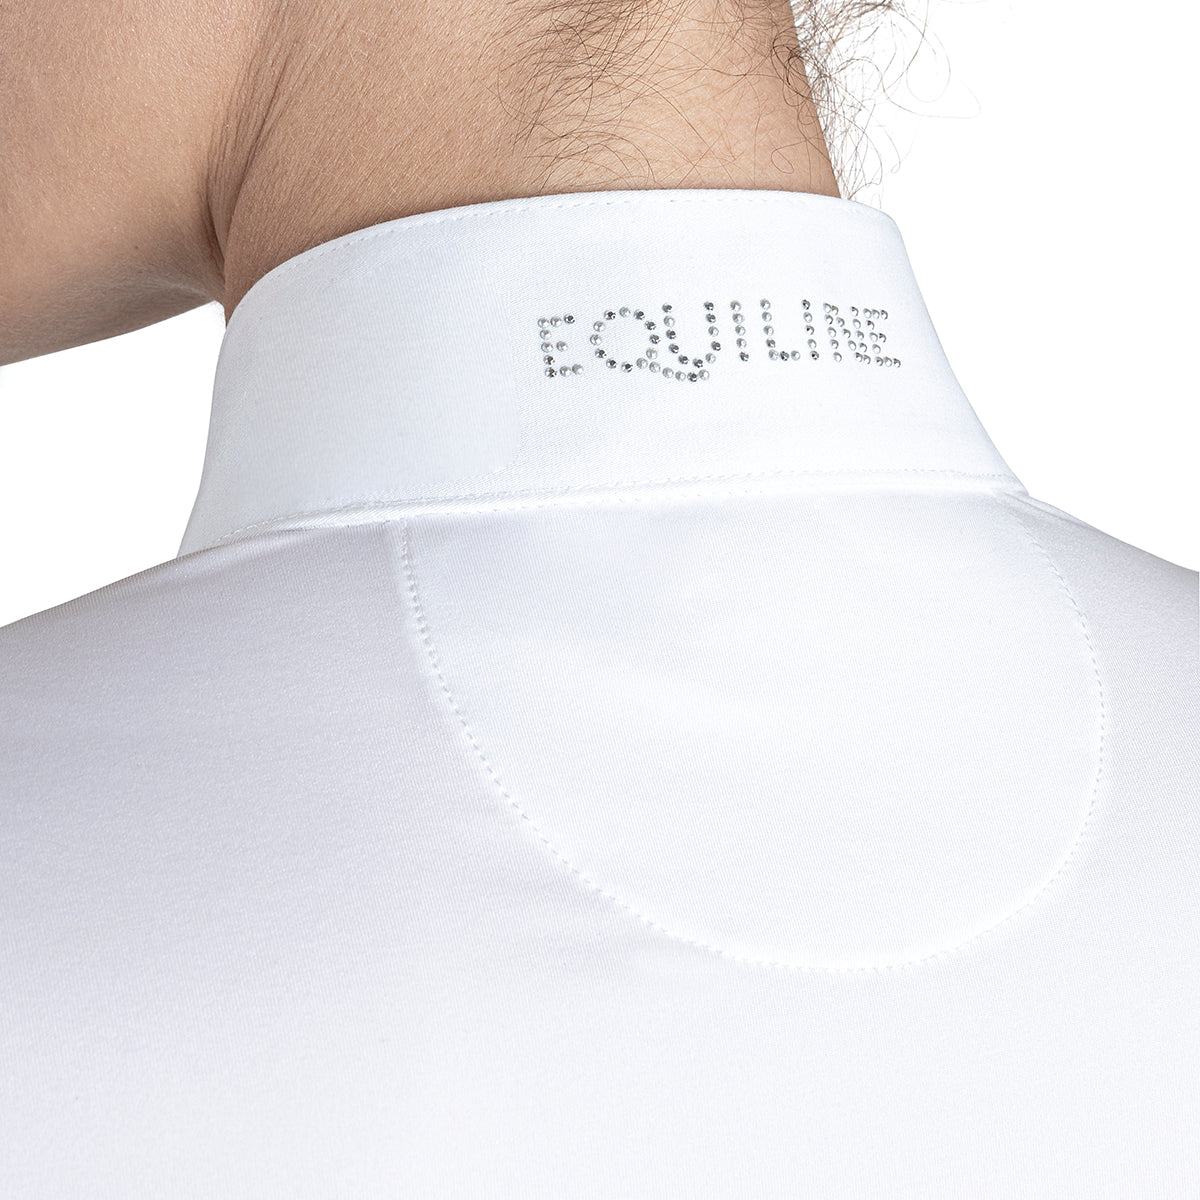 Equiline Women's GollyG Long Sleeve Show Shirt